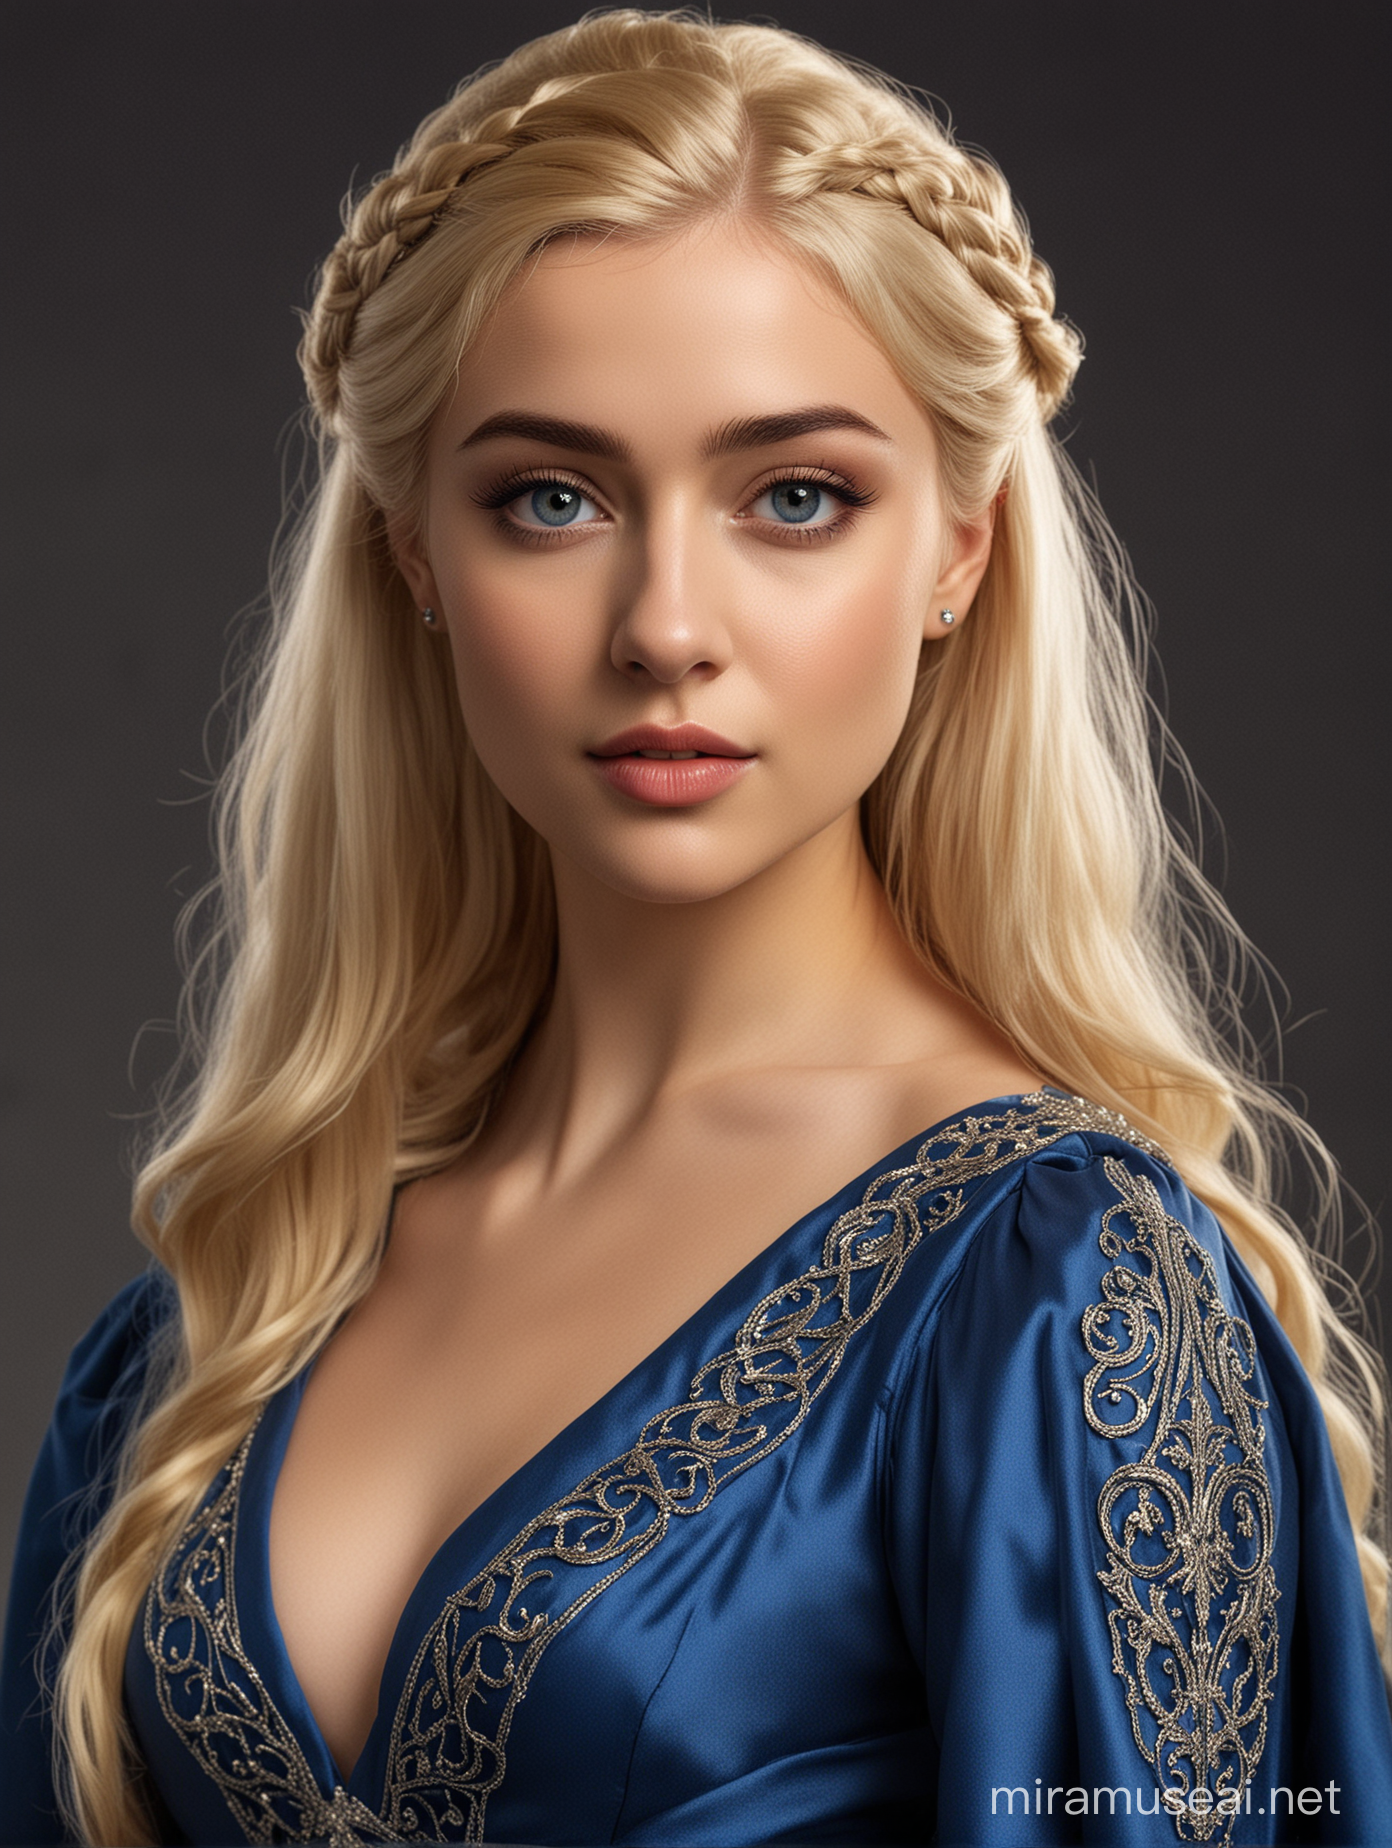 22 yo valyrian female,valyrian style blonde hair,valyrian style blue gown